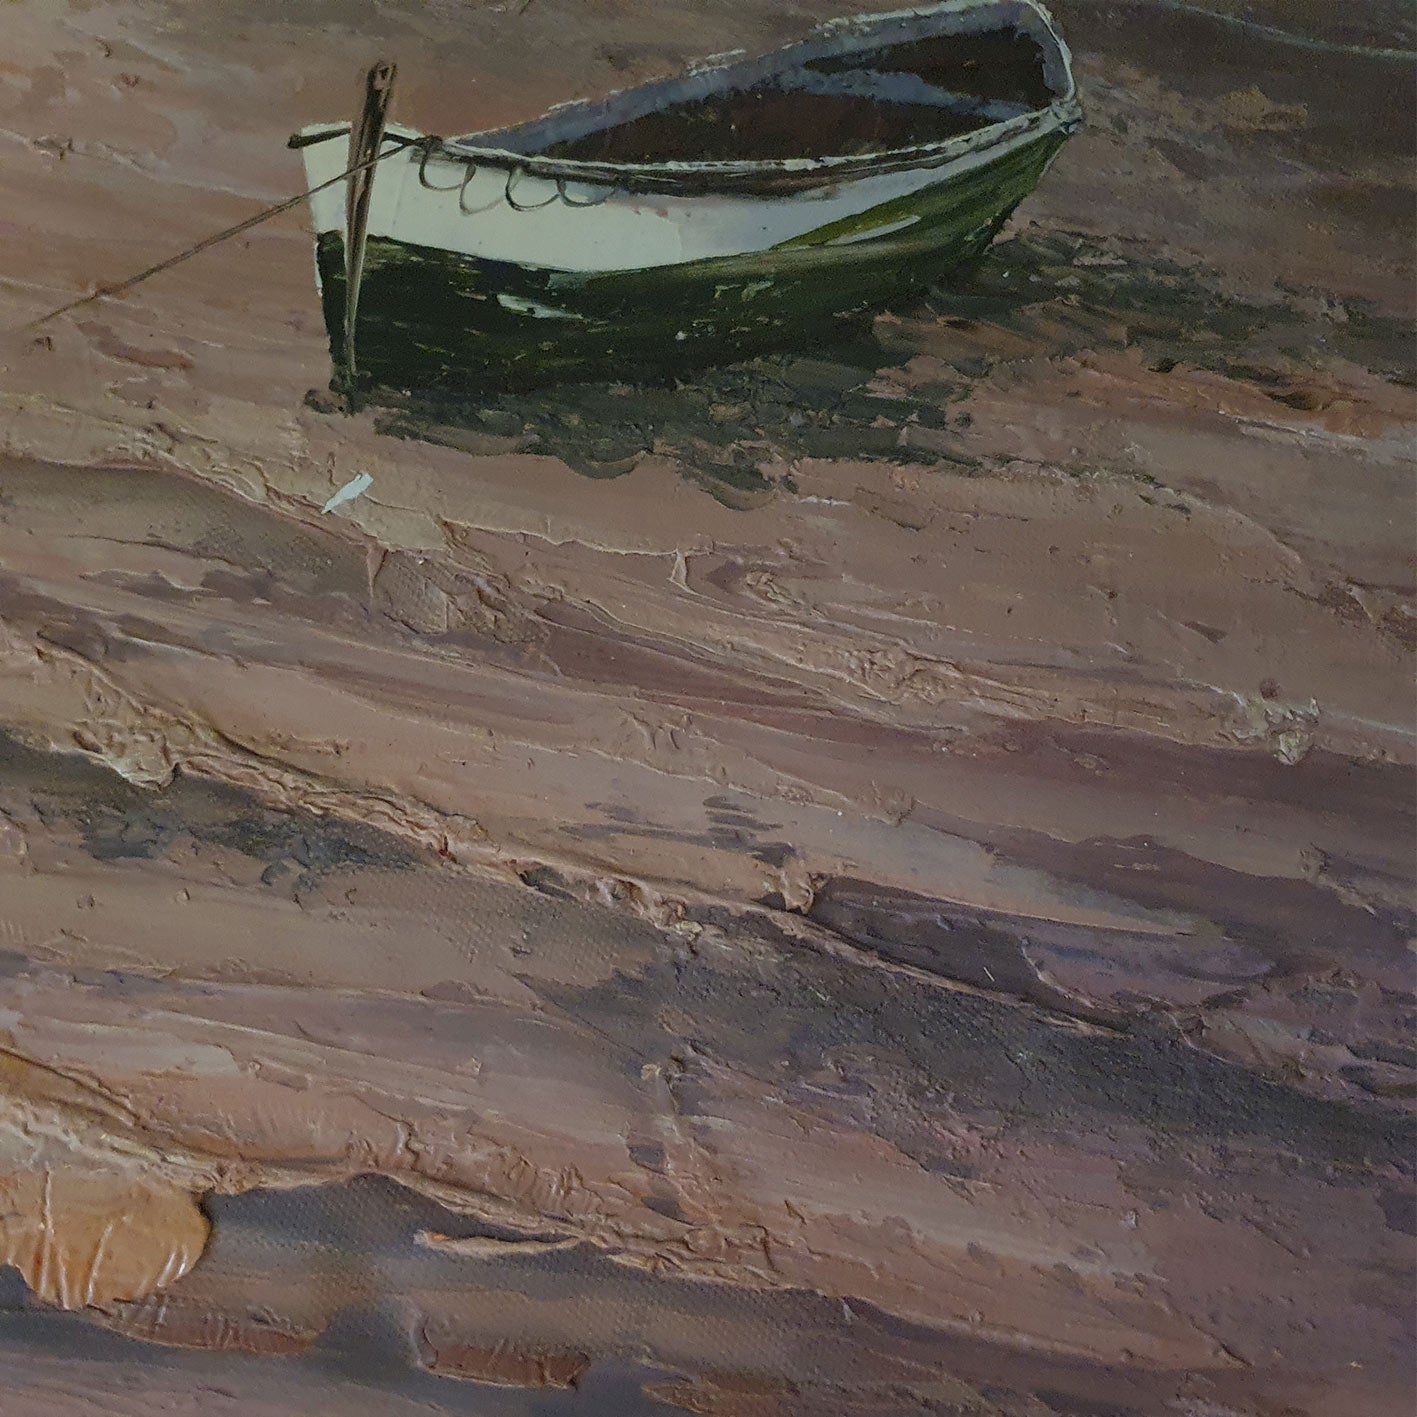 Beach Boat II painting 80x80 cm